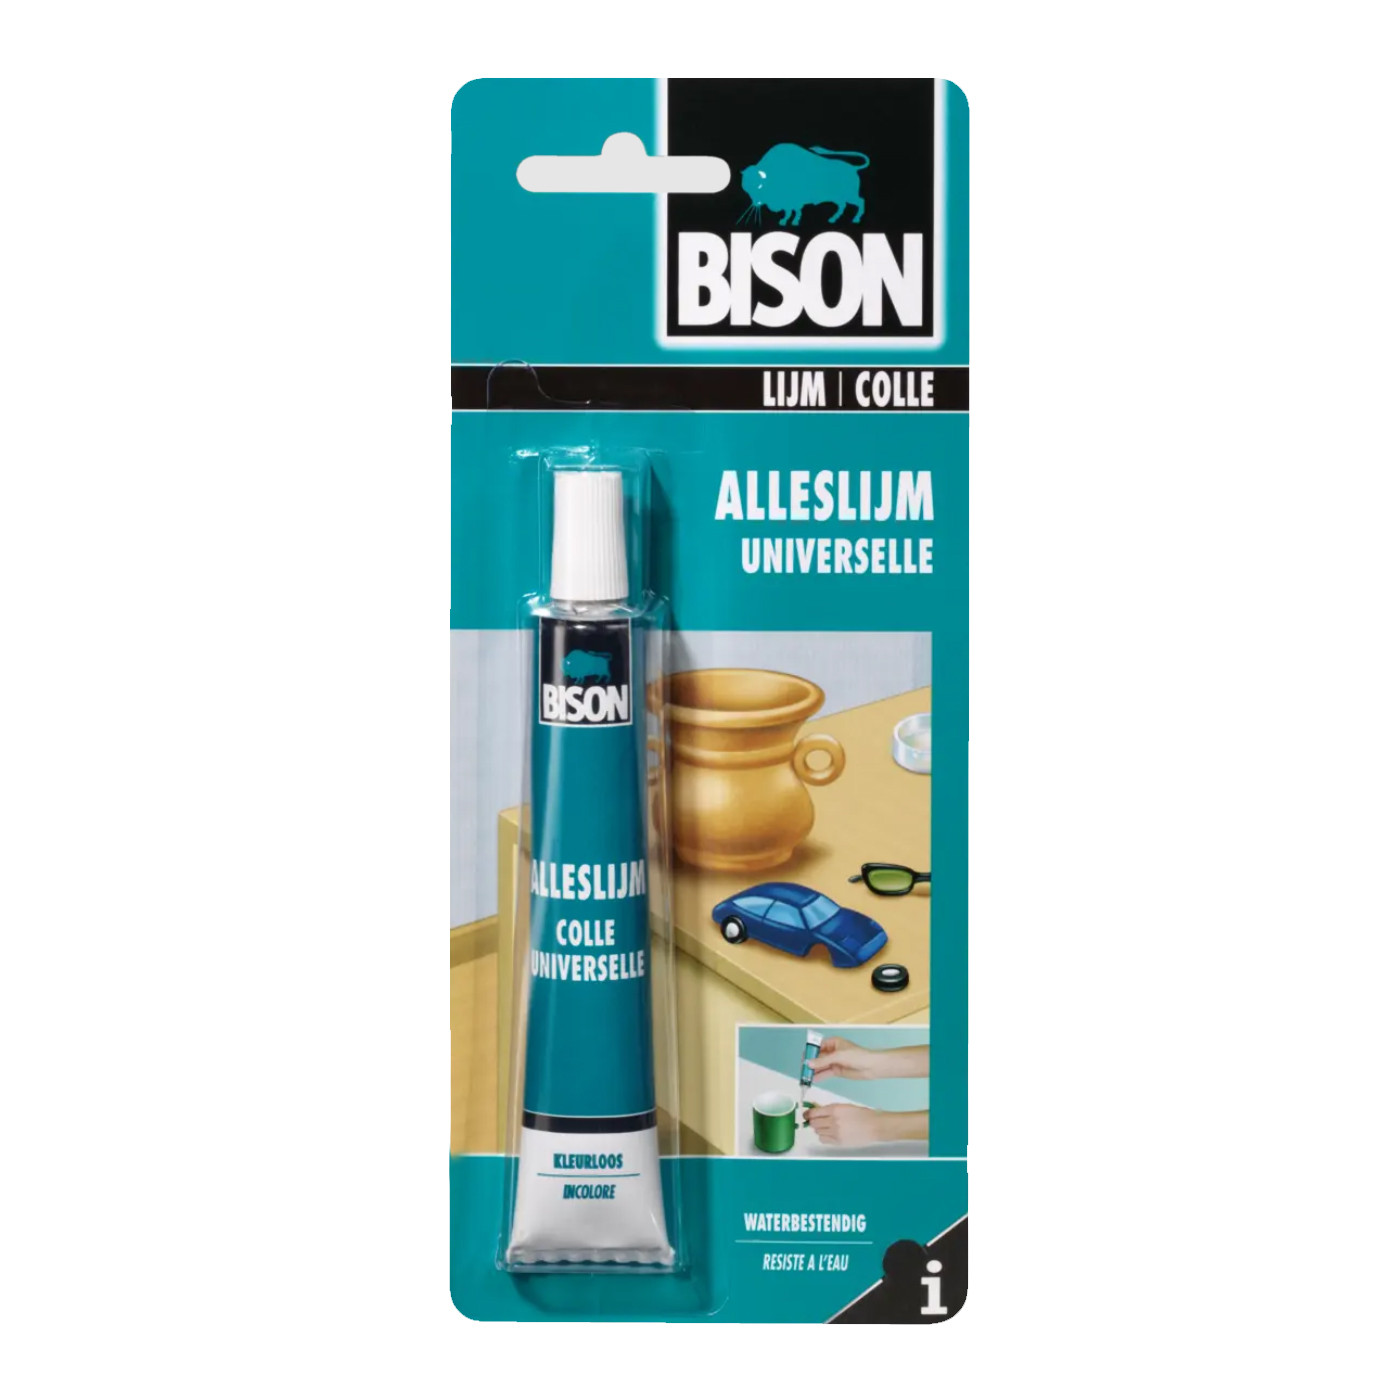 Bison universal all-purpose glue in tube (25 ml)